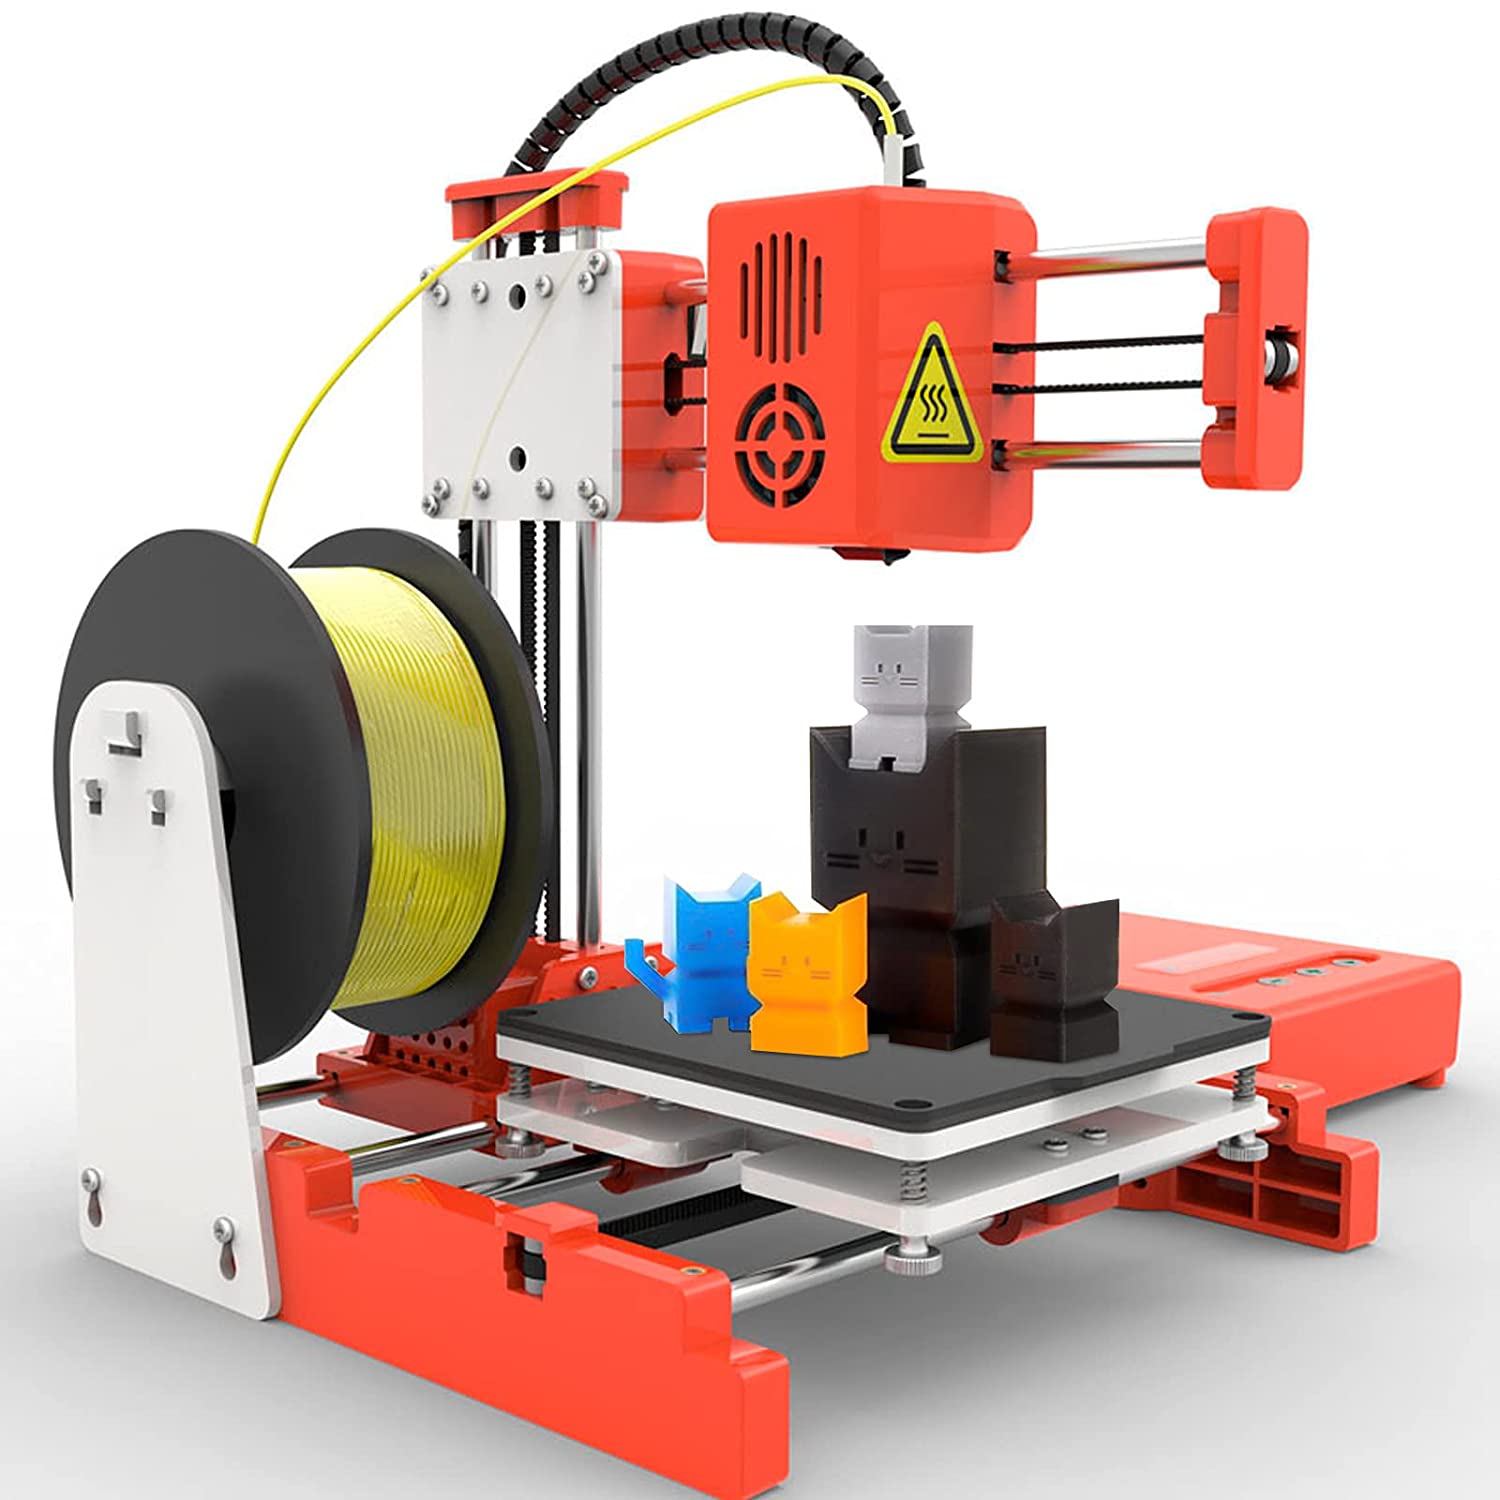 Haosegd X1 Mini 3D Printer for Kids